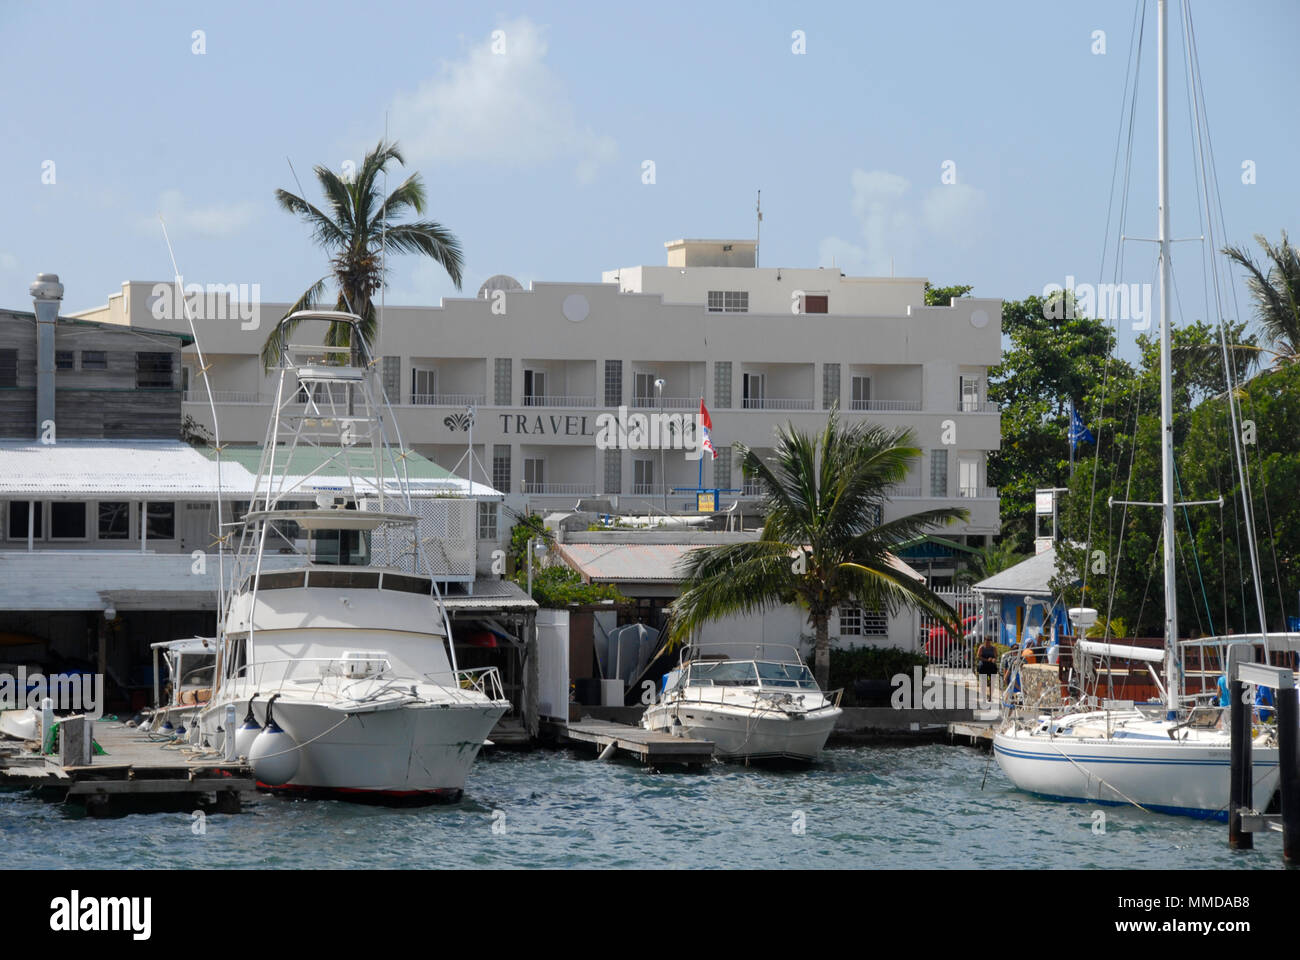 Travel Inn, WATERSIDE, Simpson Bay, St Maarten, dei Caraibi Foto Stock